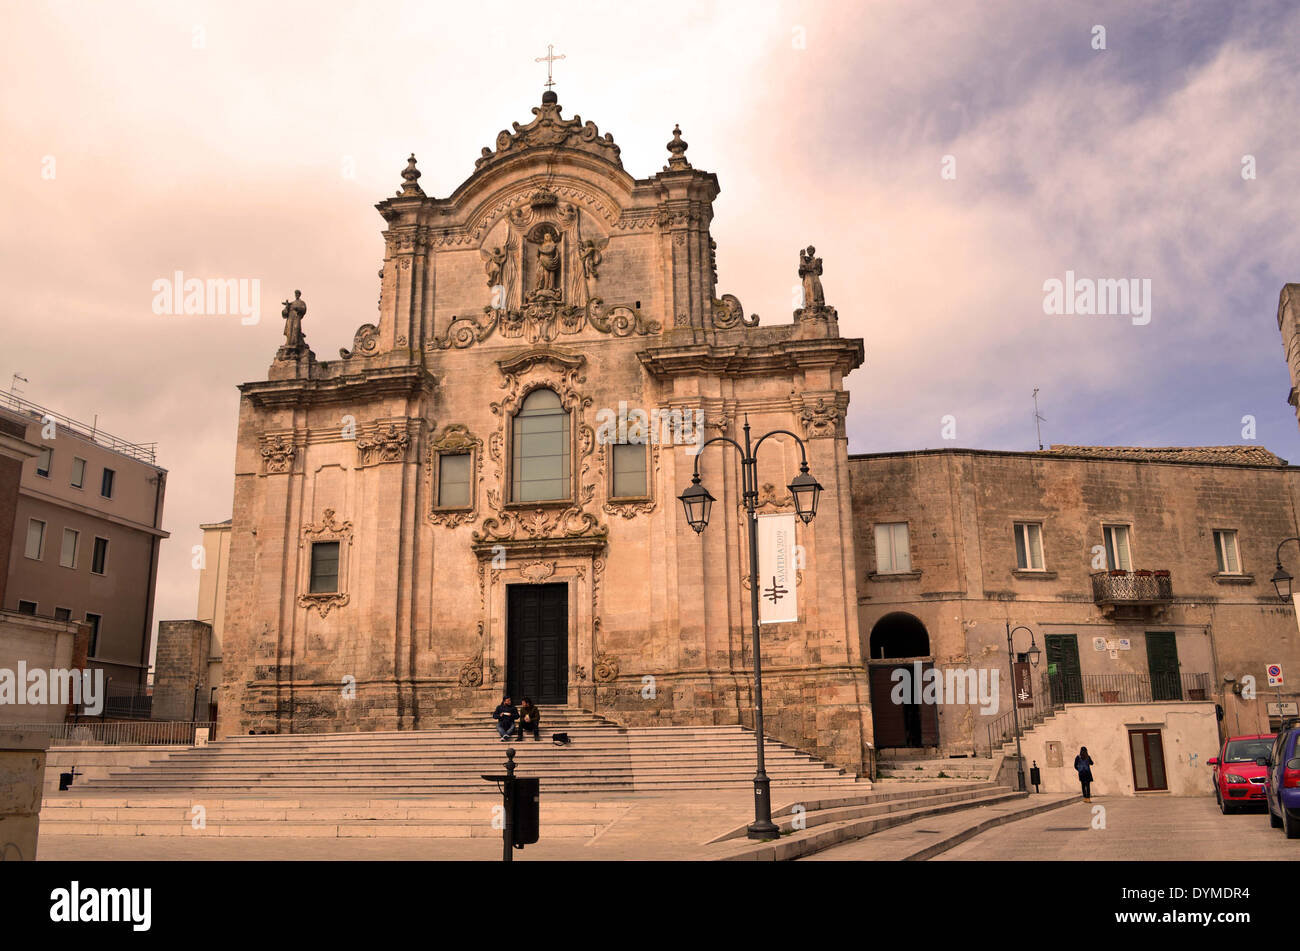 Matera,l'trogladytic città del sud Italia ha oltre 80 chiese, pic. mostra la chiesa di San Francesco di Assisi. Foto Stock